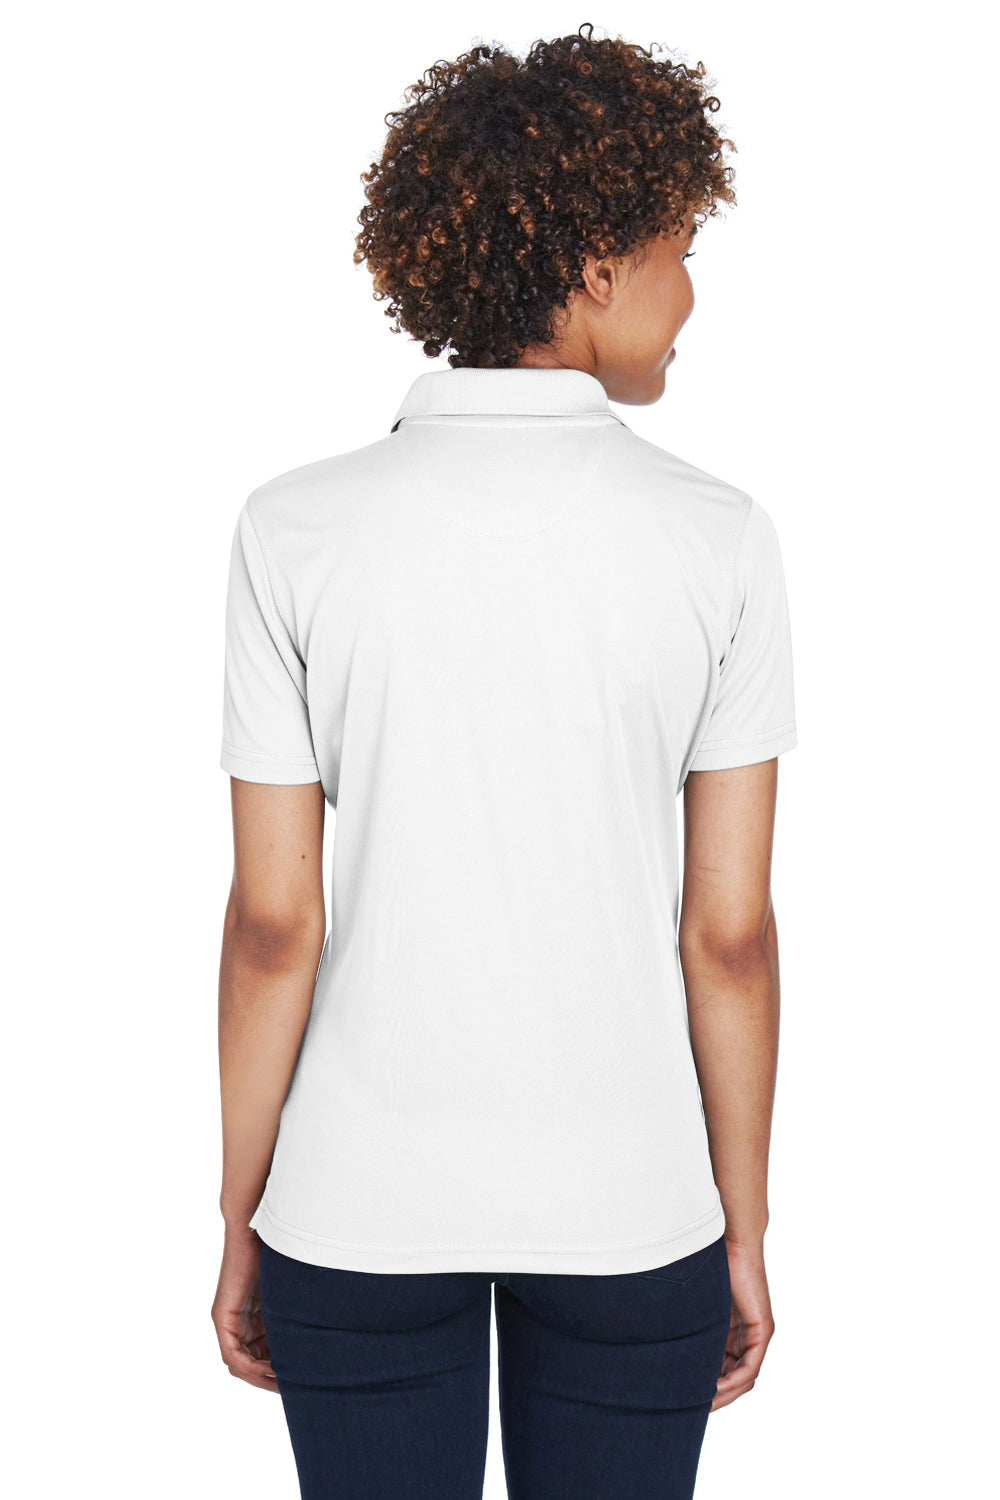 UltraClub 8210L Womens Cool & Dry Moisture Wicking Short Sleeve Polo Shirt White Back